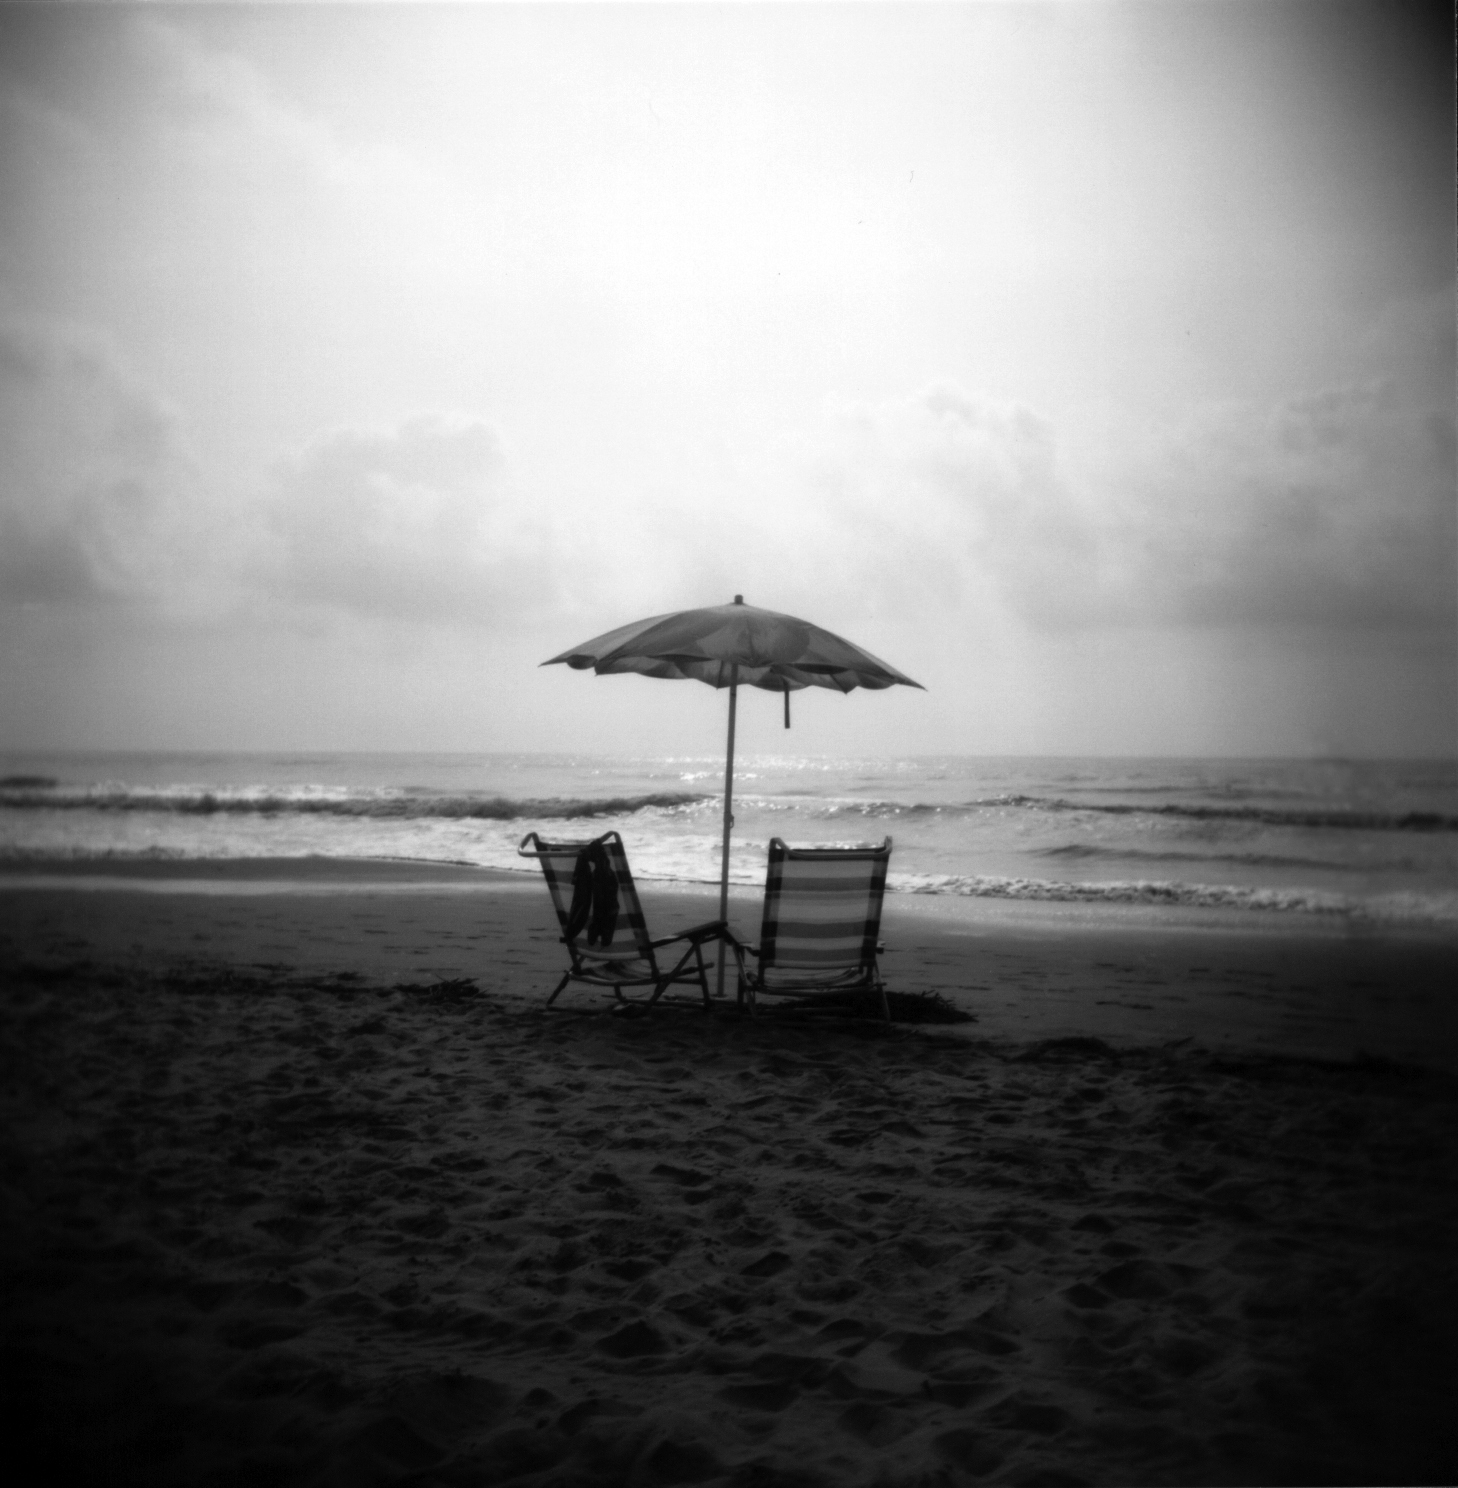 Two striped beach chairs and an umbrella on a sandy beach.